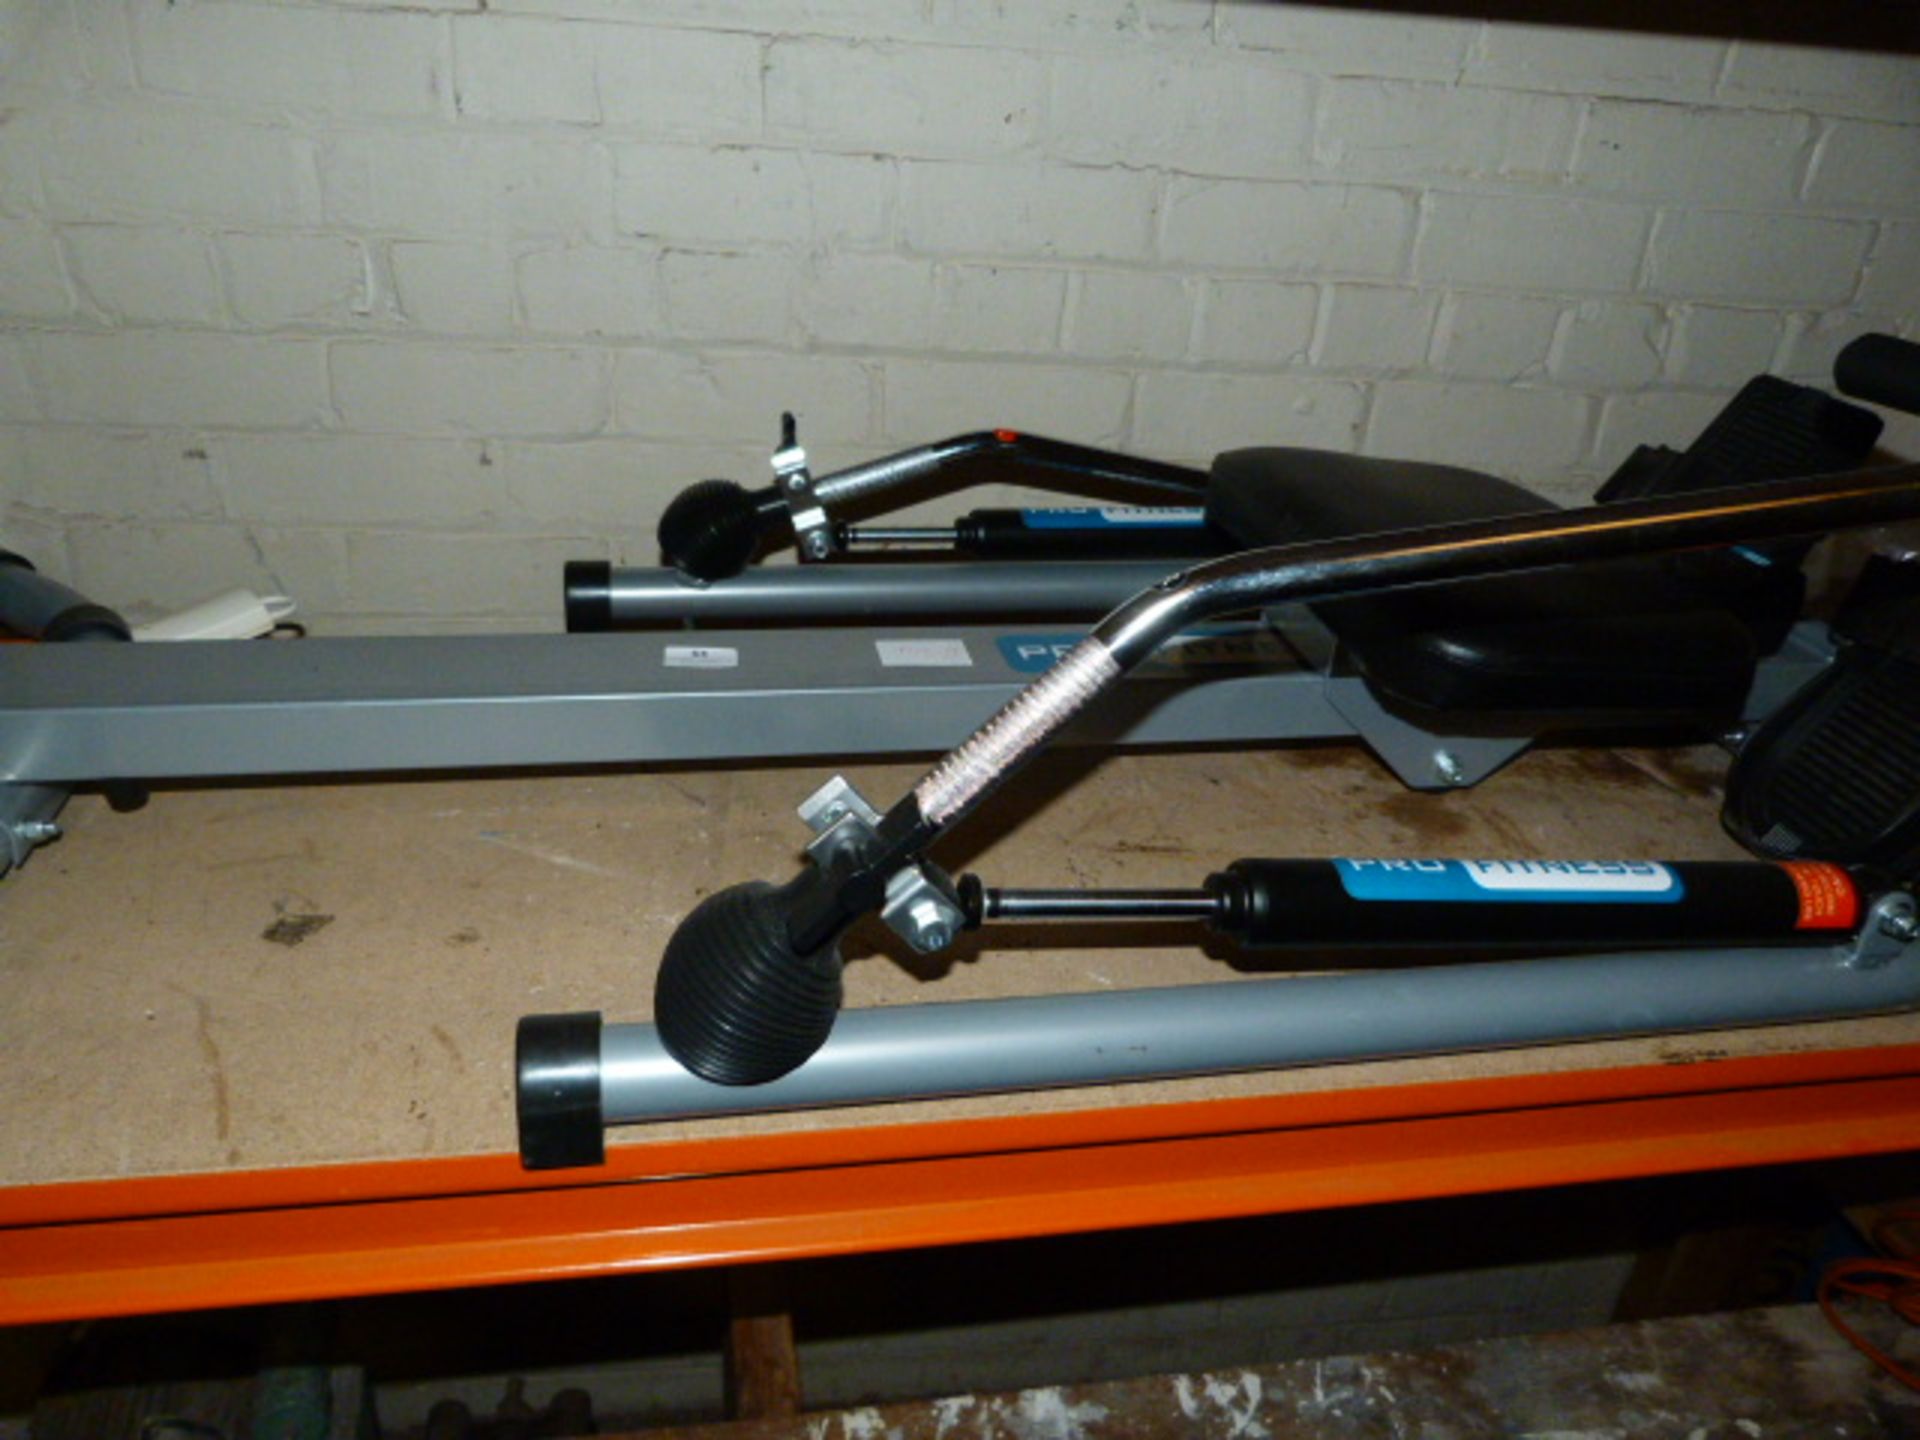 Pro Fitness Rowing Machine